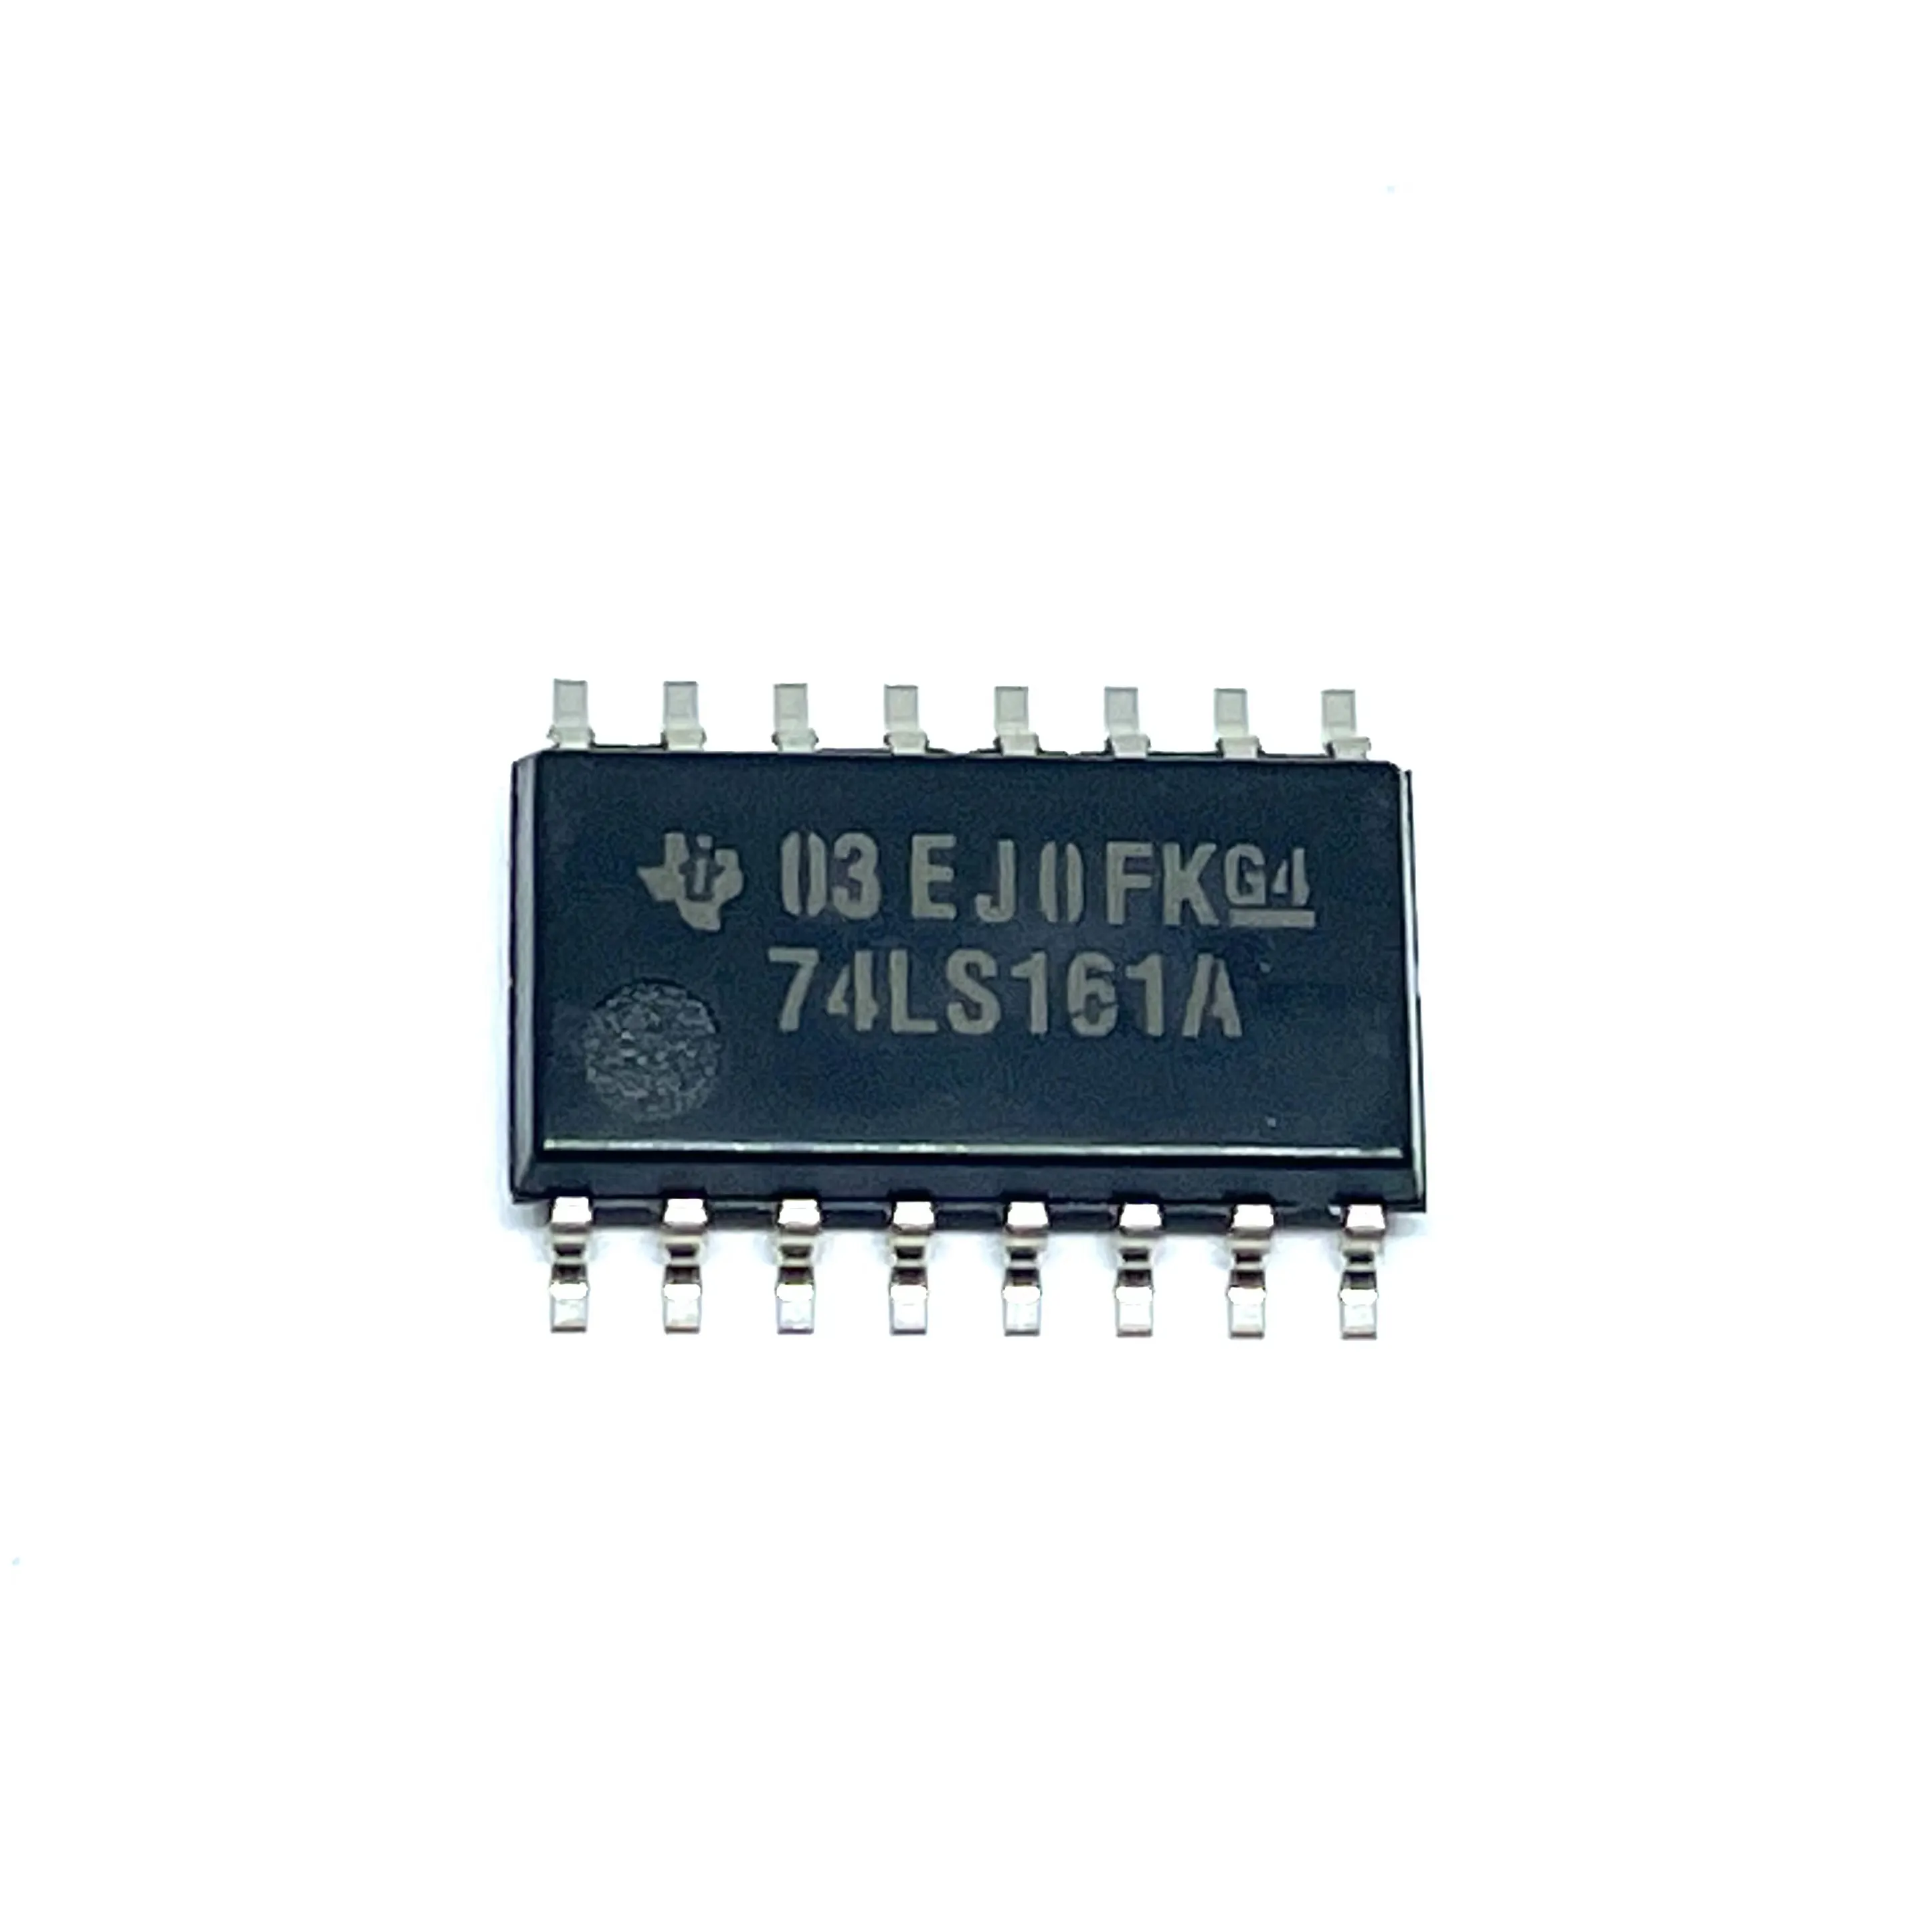 Merrillchip-componentes electrónicos de circuito integrado, producto Original, SN74LS161AN